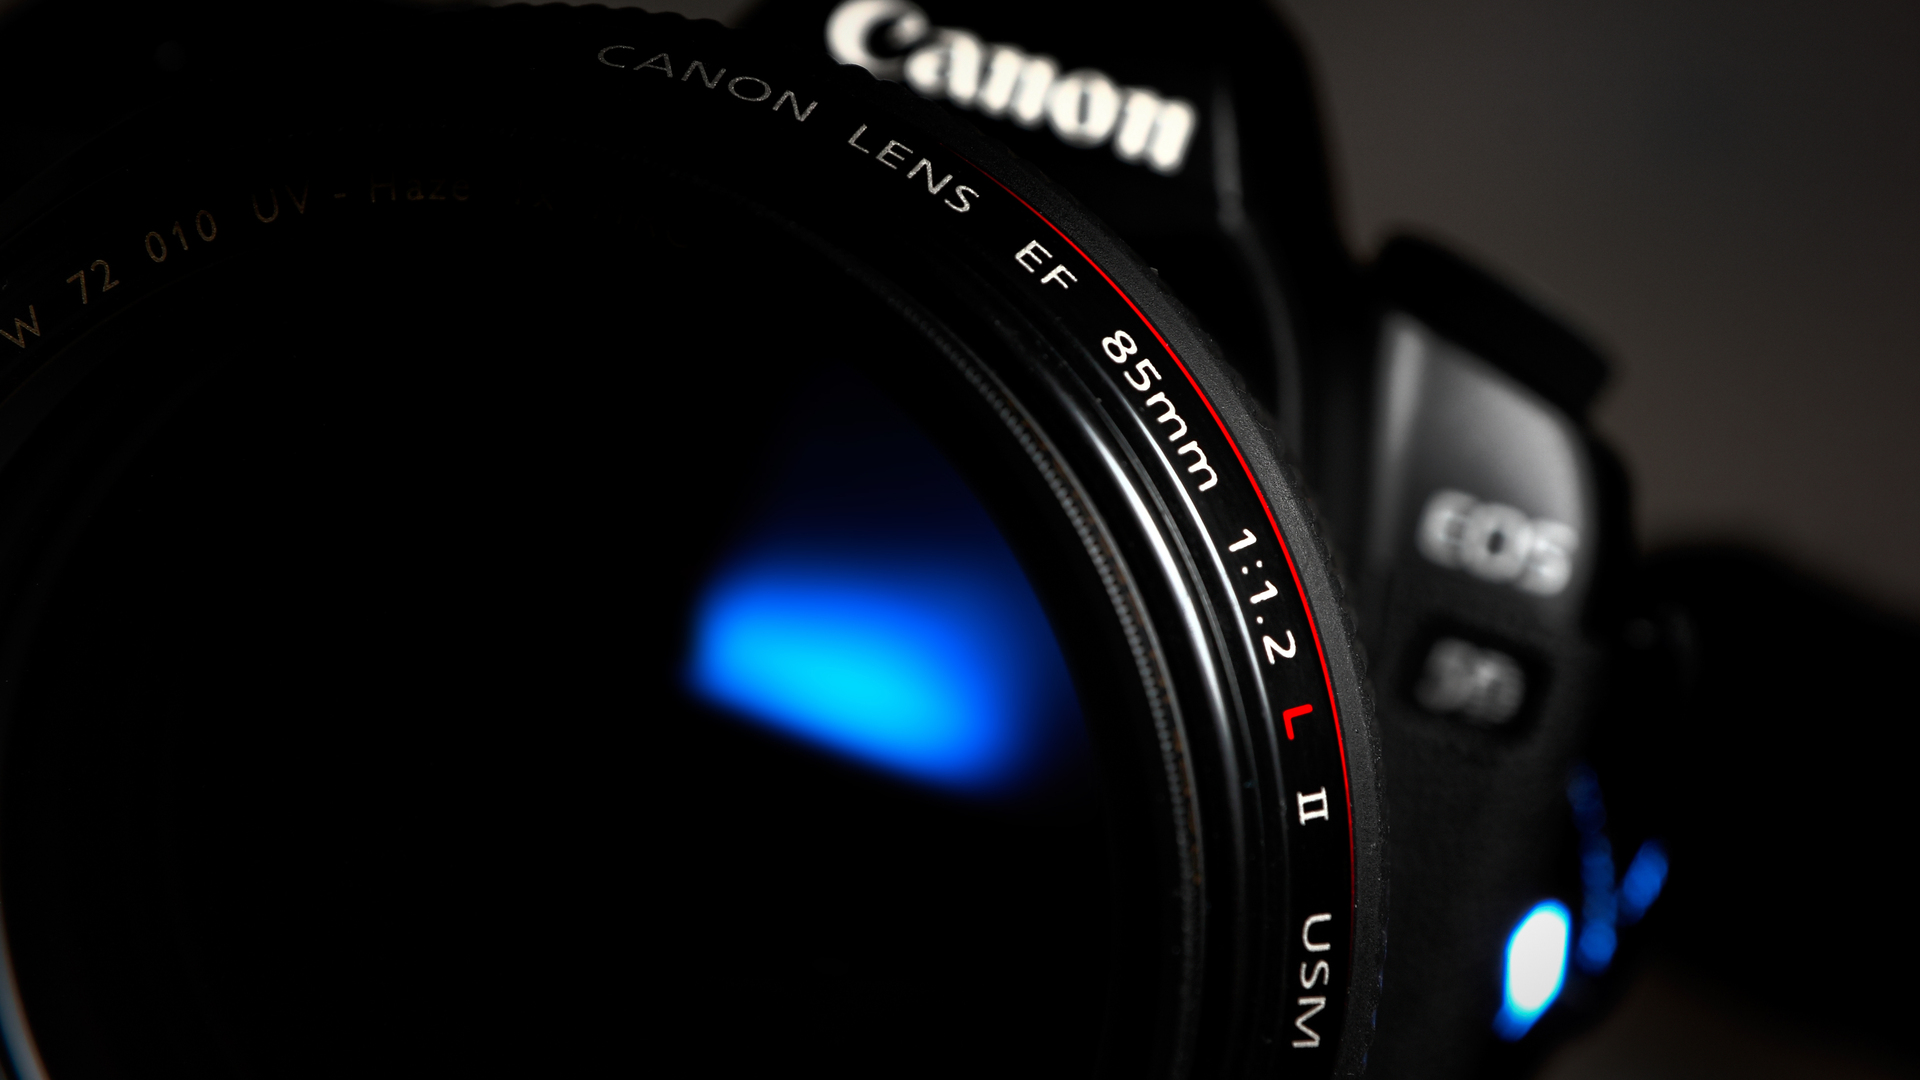 Canon Camera Photography